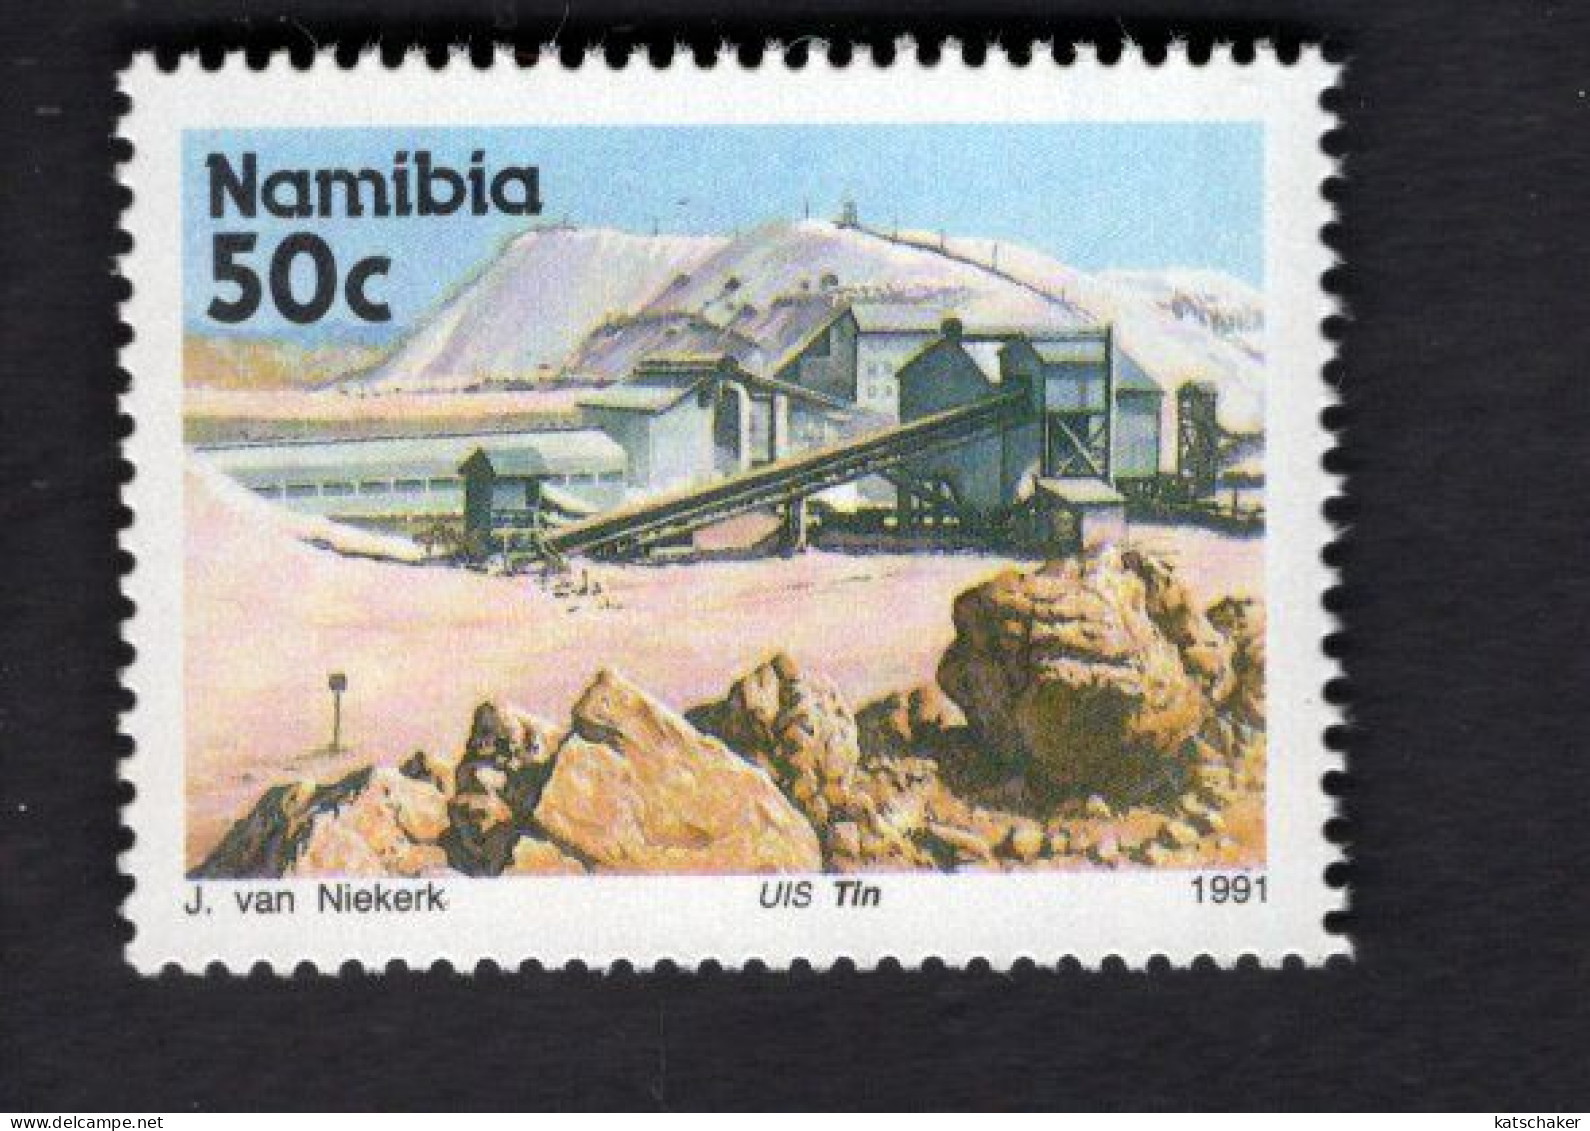 2025400223 1991 SCOTT 685 (XX) POSTFRIS MINT NEVER HINGED - MINERALS & MINES - UIS MINE - Namibia (1990- ...)